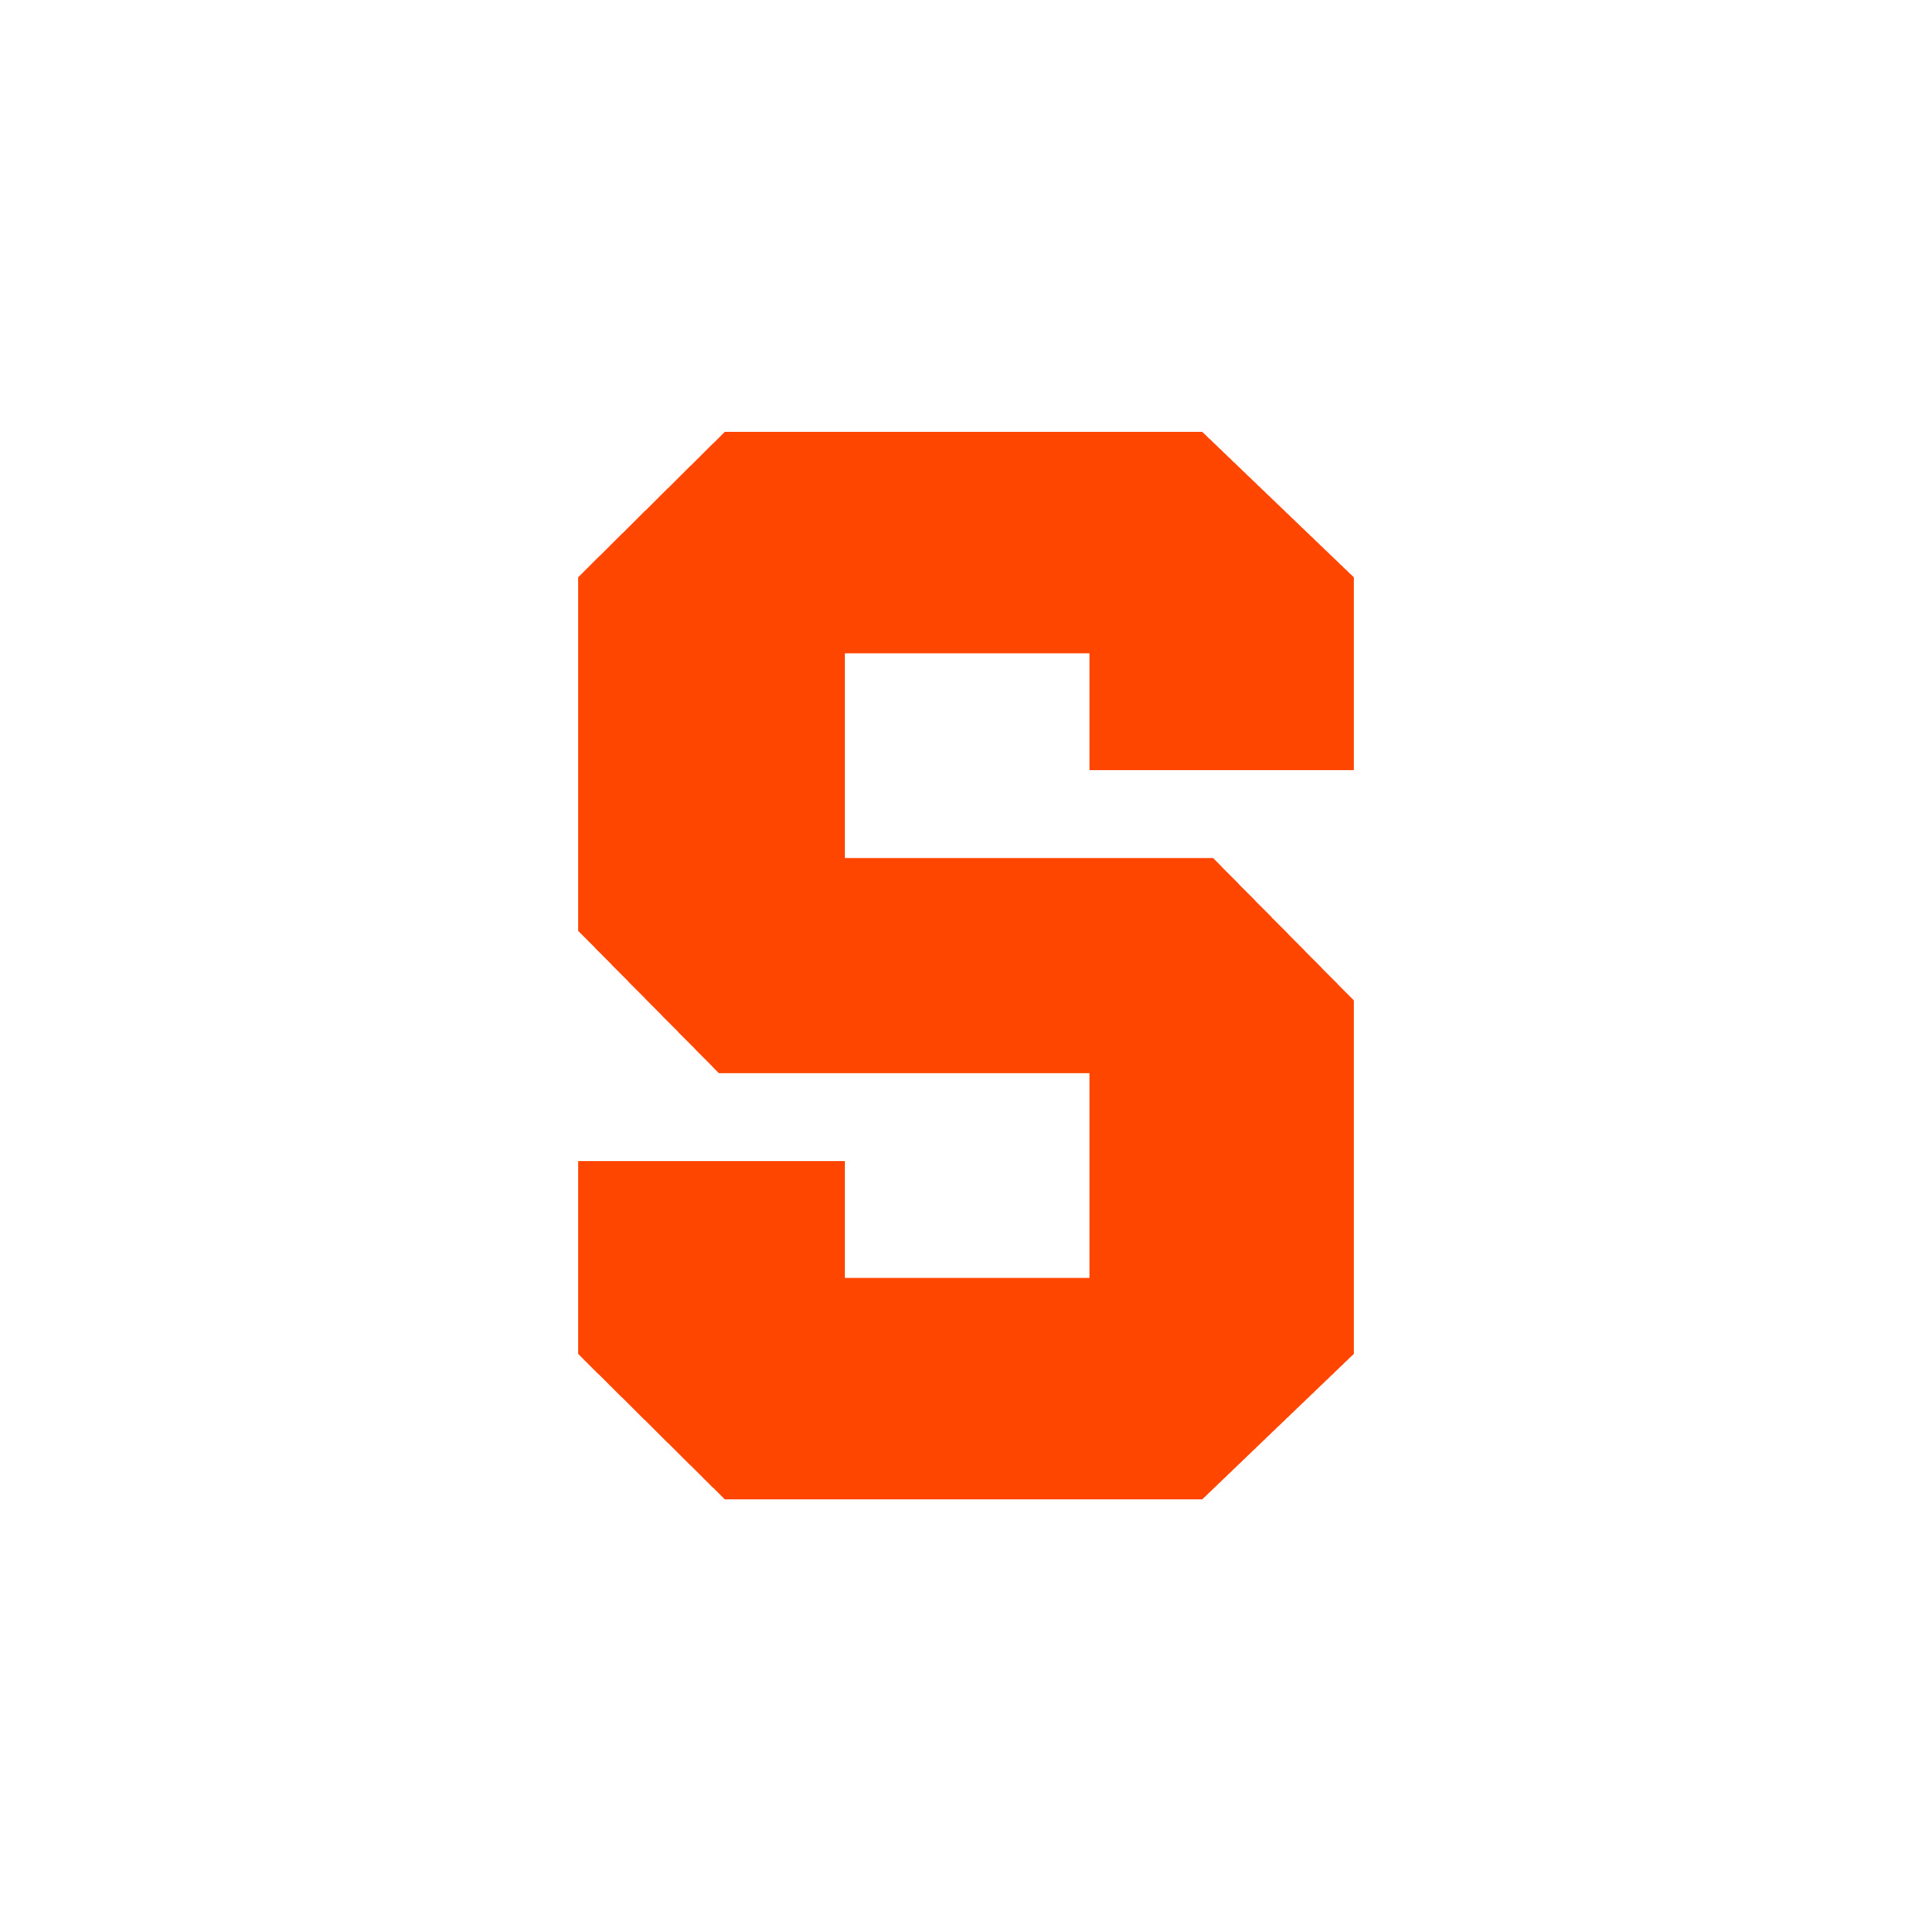 Syracuse Orange Block S logo